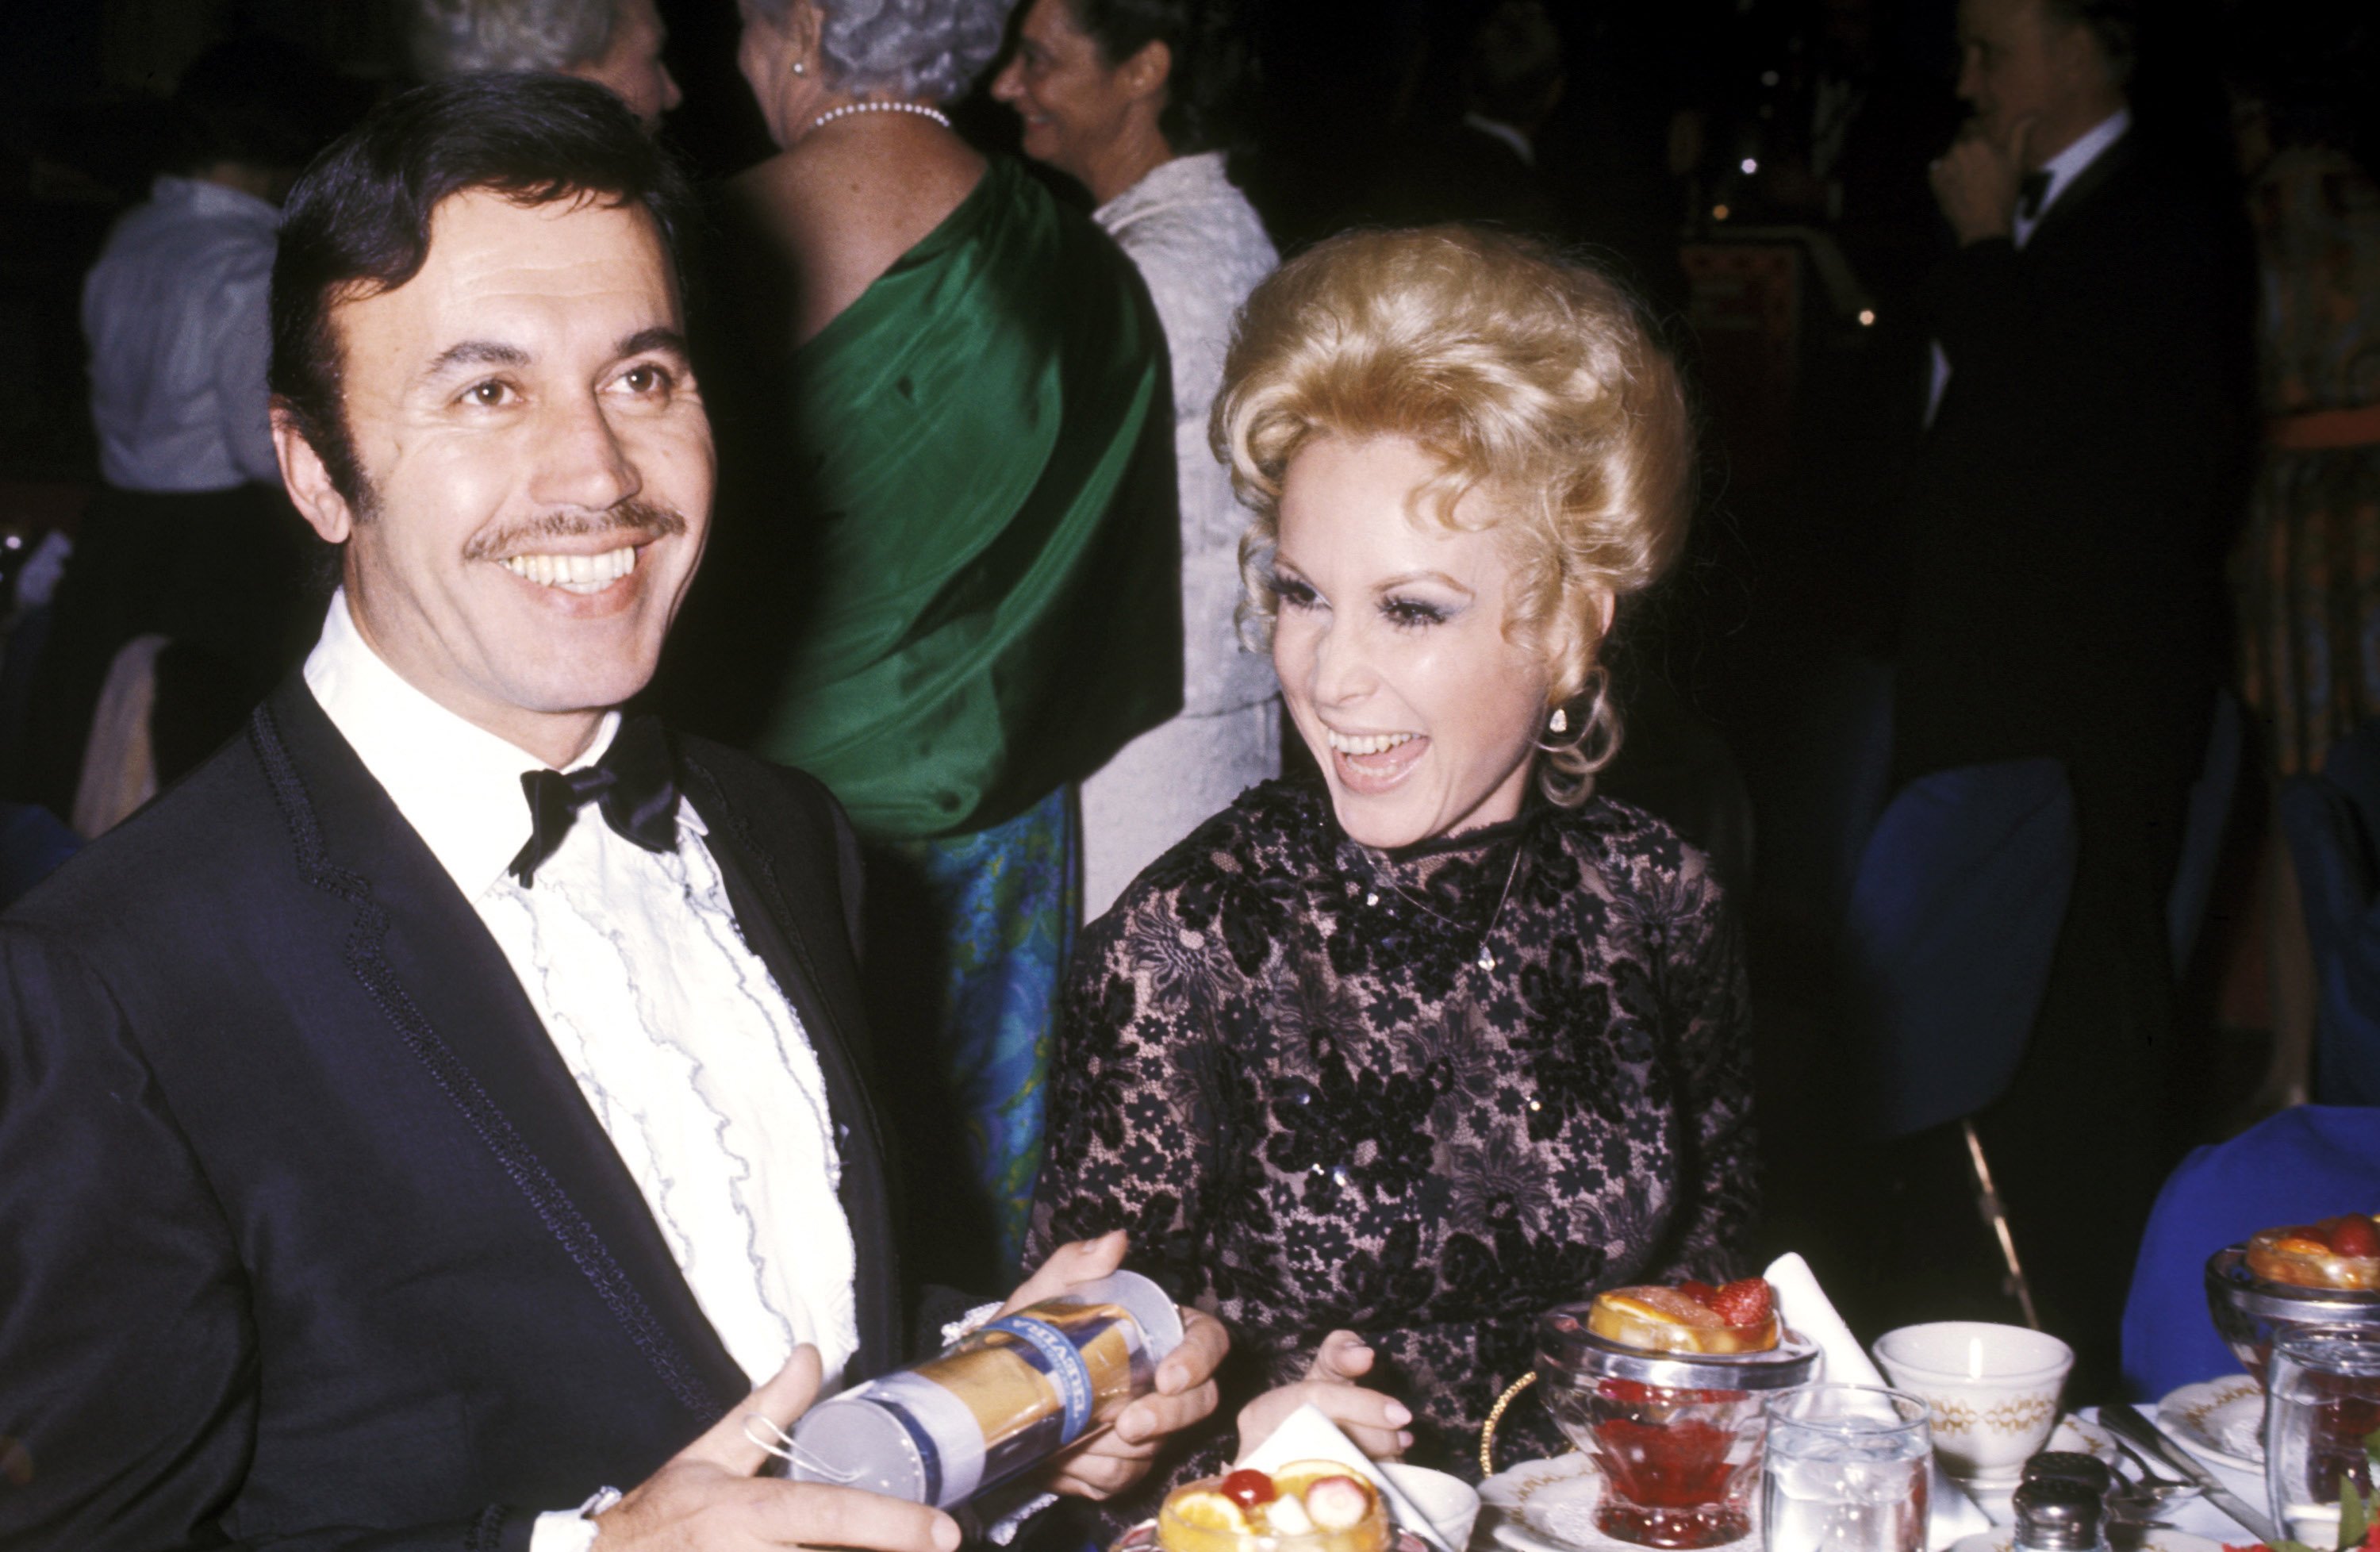 Michael Ansara and Barbara Eden sitting at a table